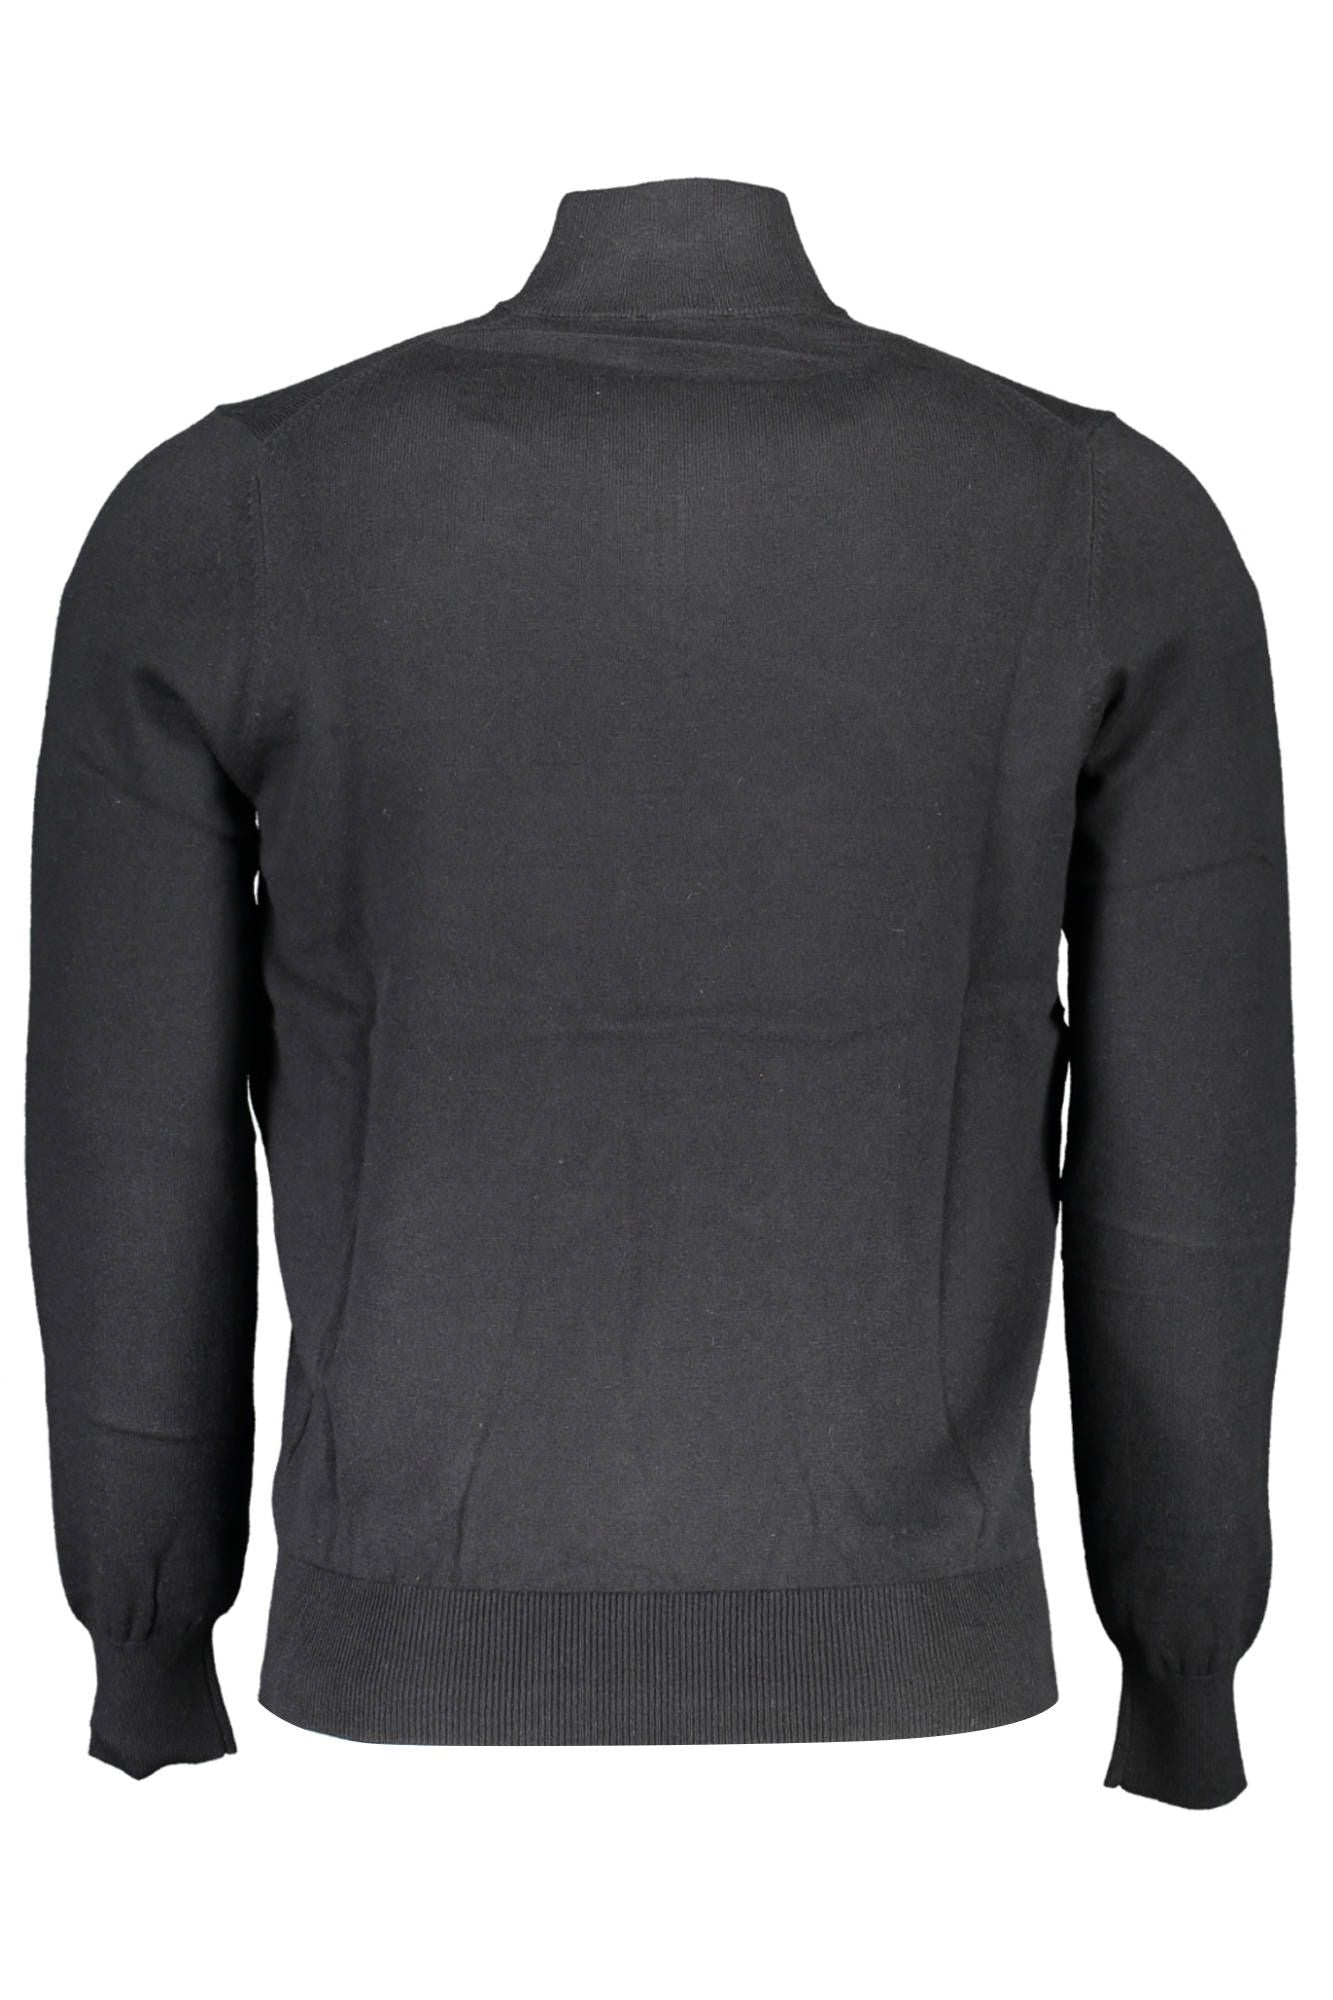 North Sails Eco-Conscious Half-Zip Sweater in Black